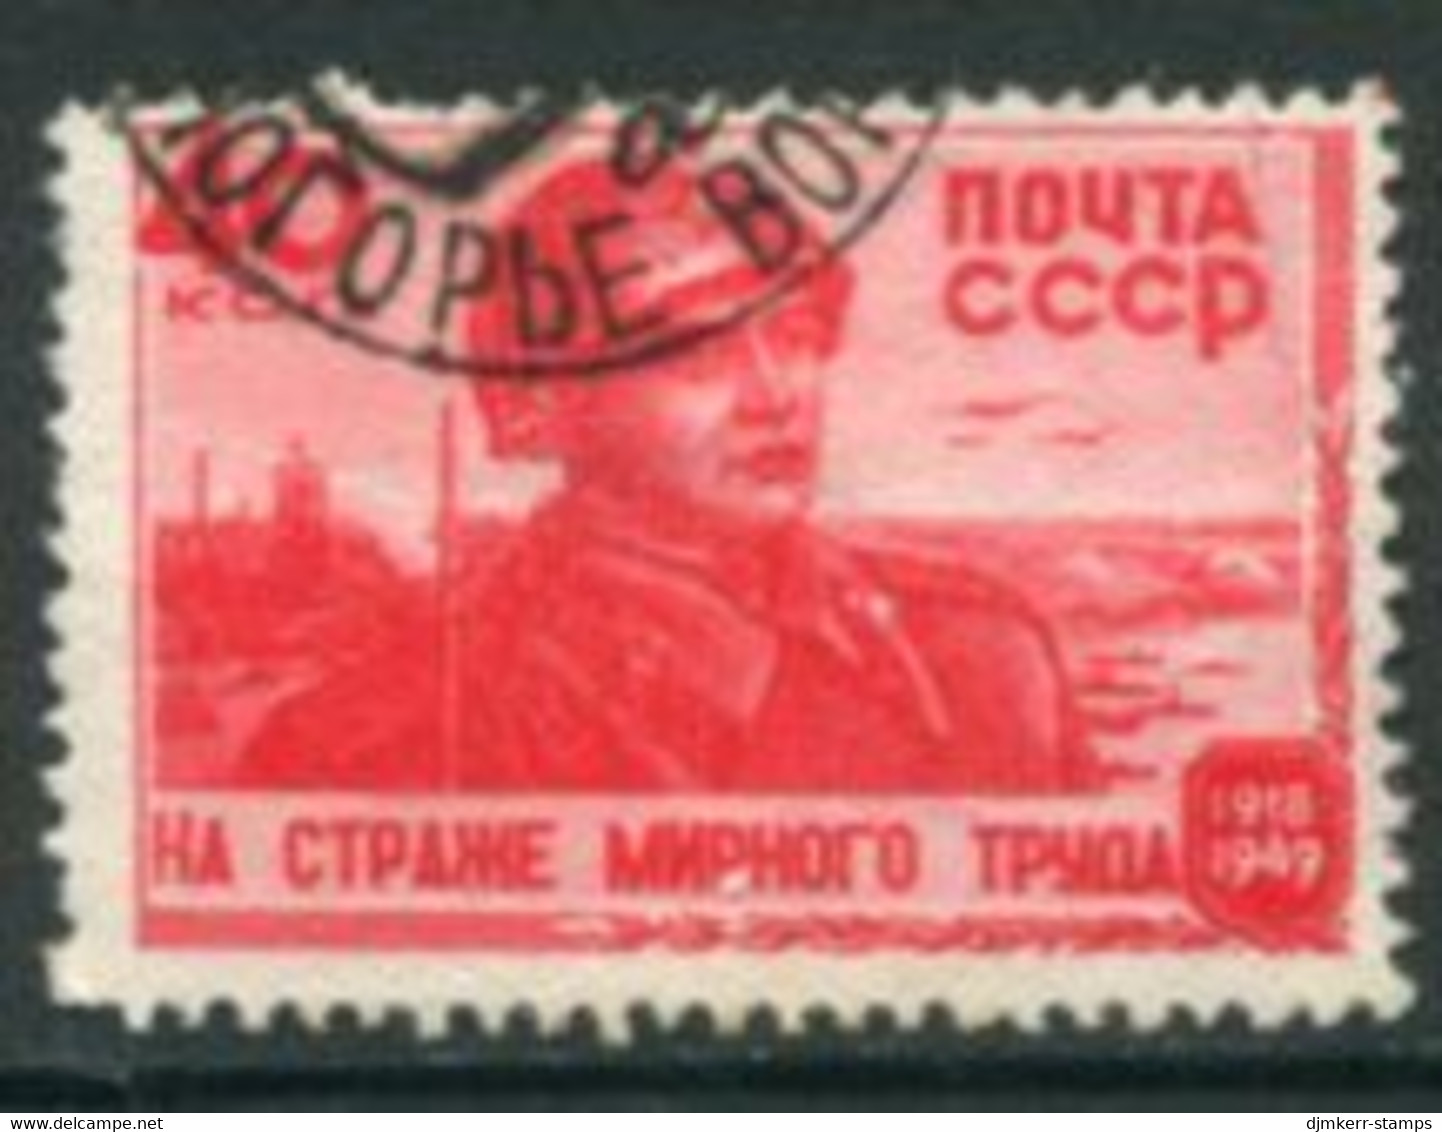 SOVIET UNION 1949 Soviet Army Anniversary Used.  Michel 1327 - Gebraucht